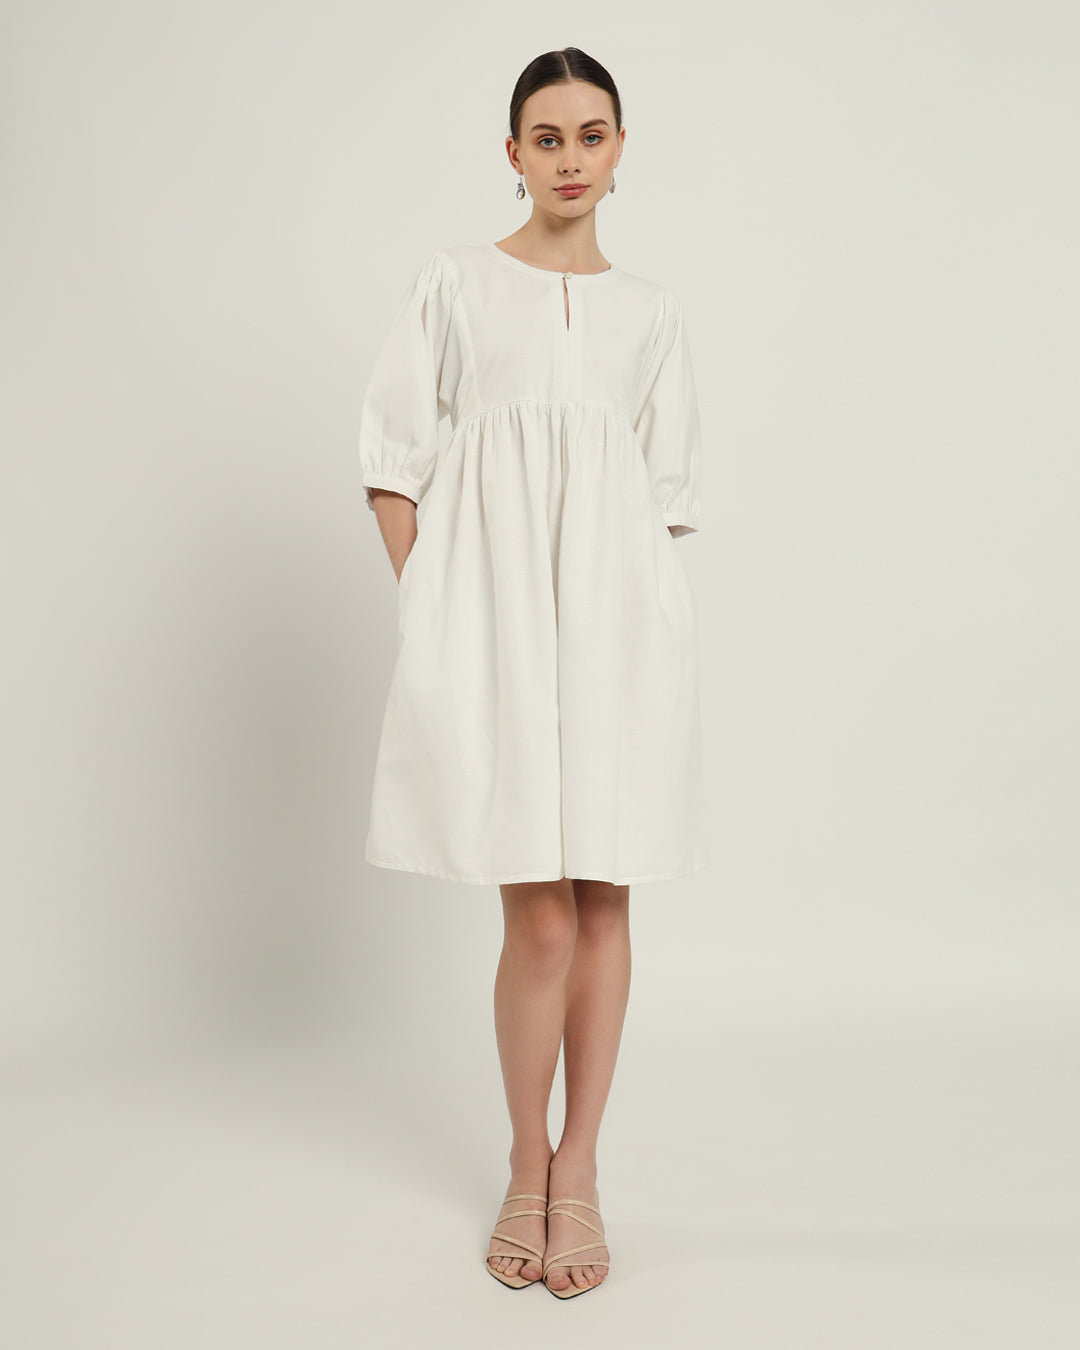 The Aira Daisy White Linen Dress